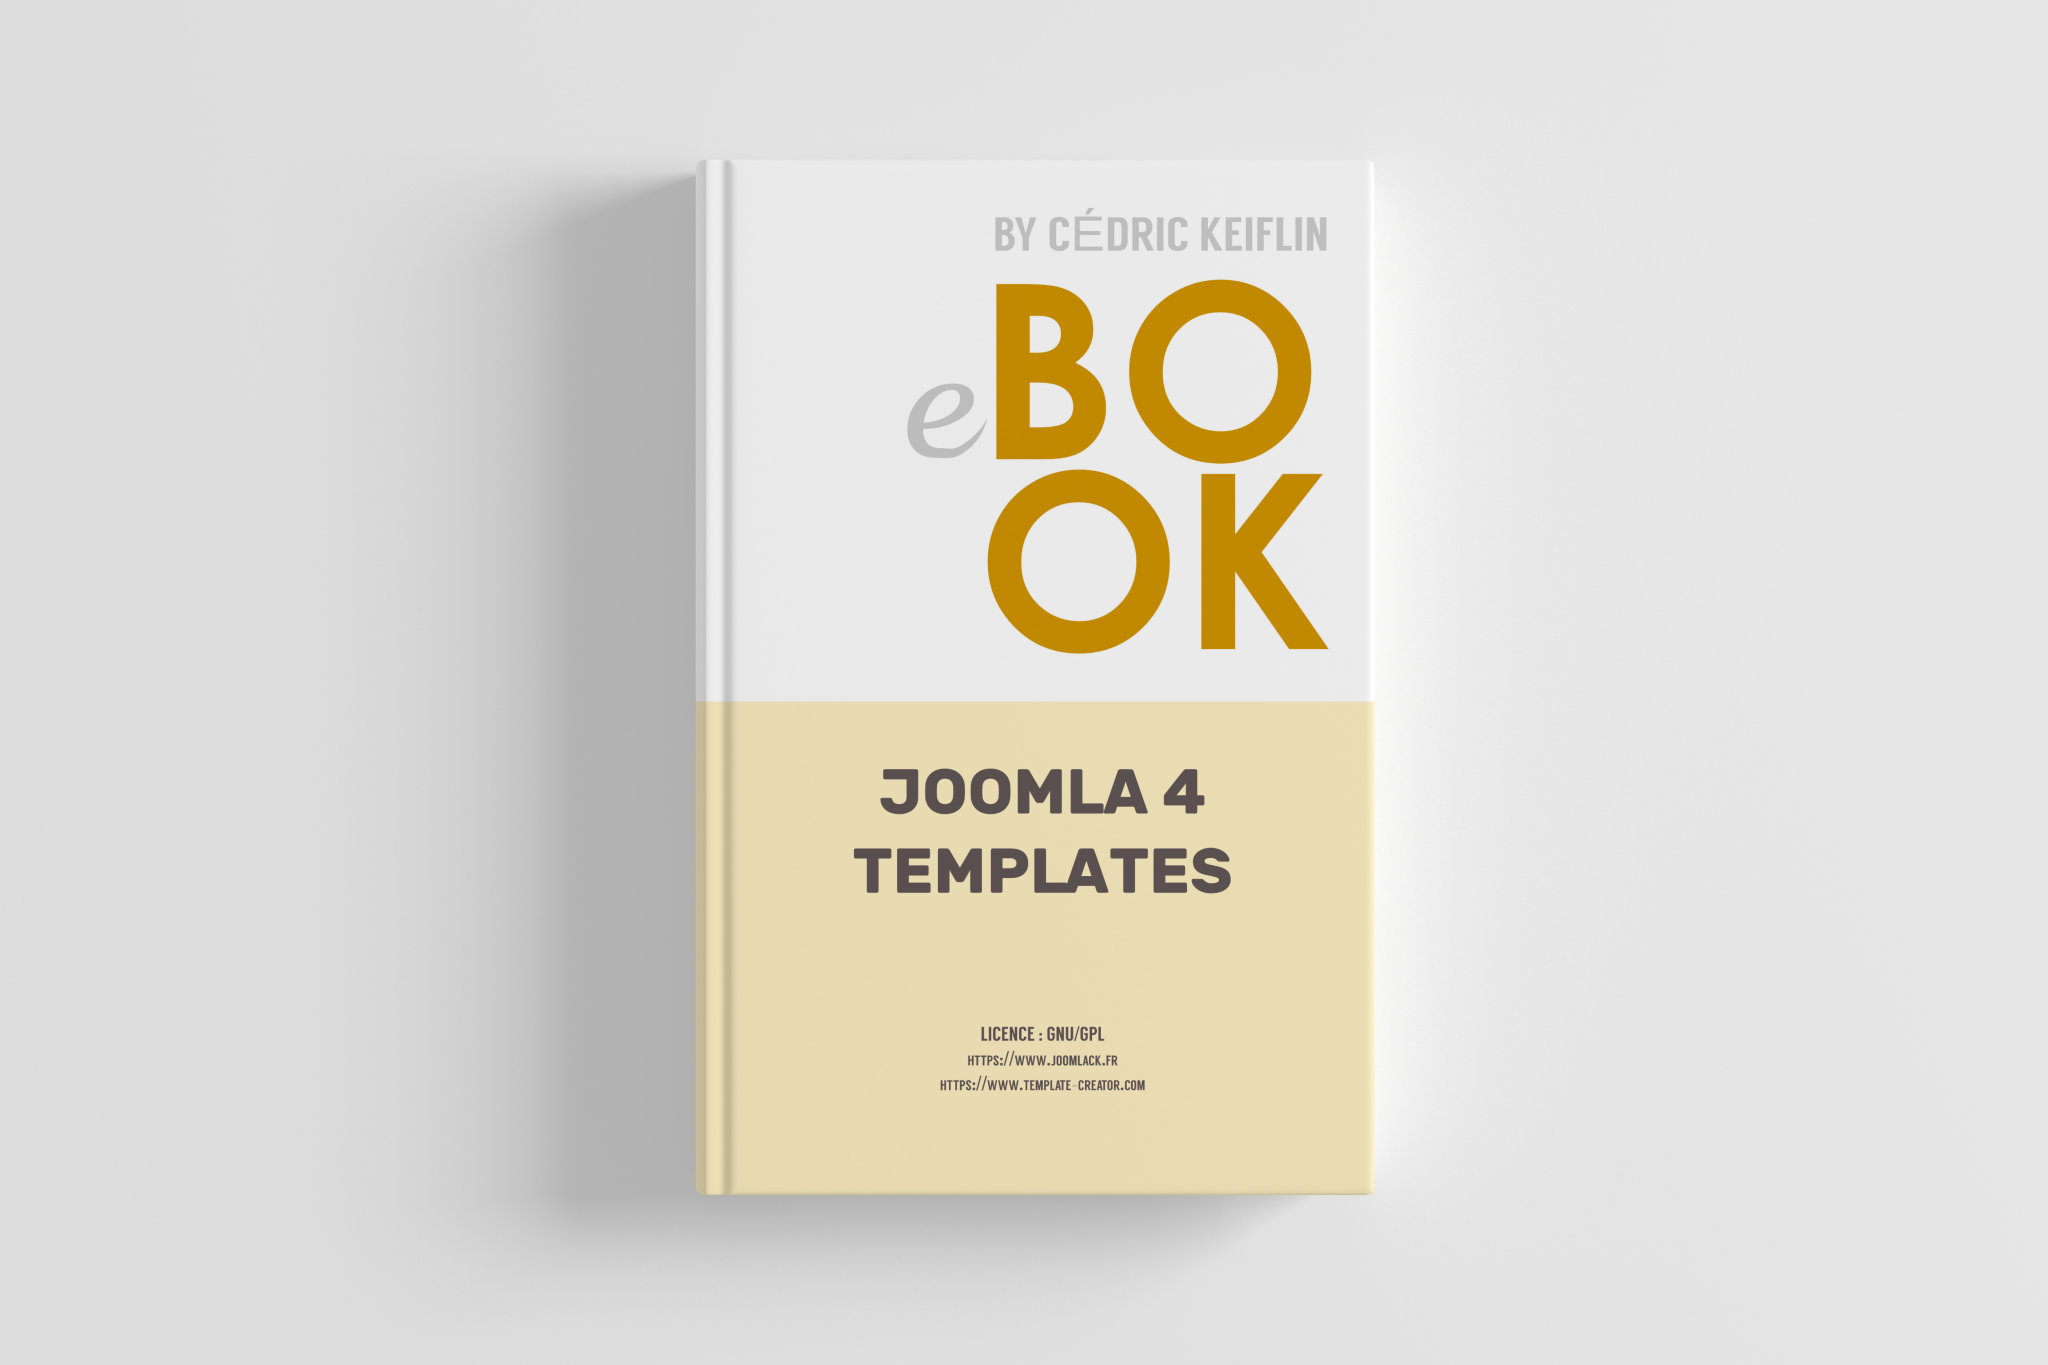 Joomla 4 templates book guide